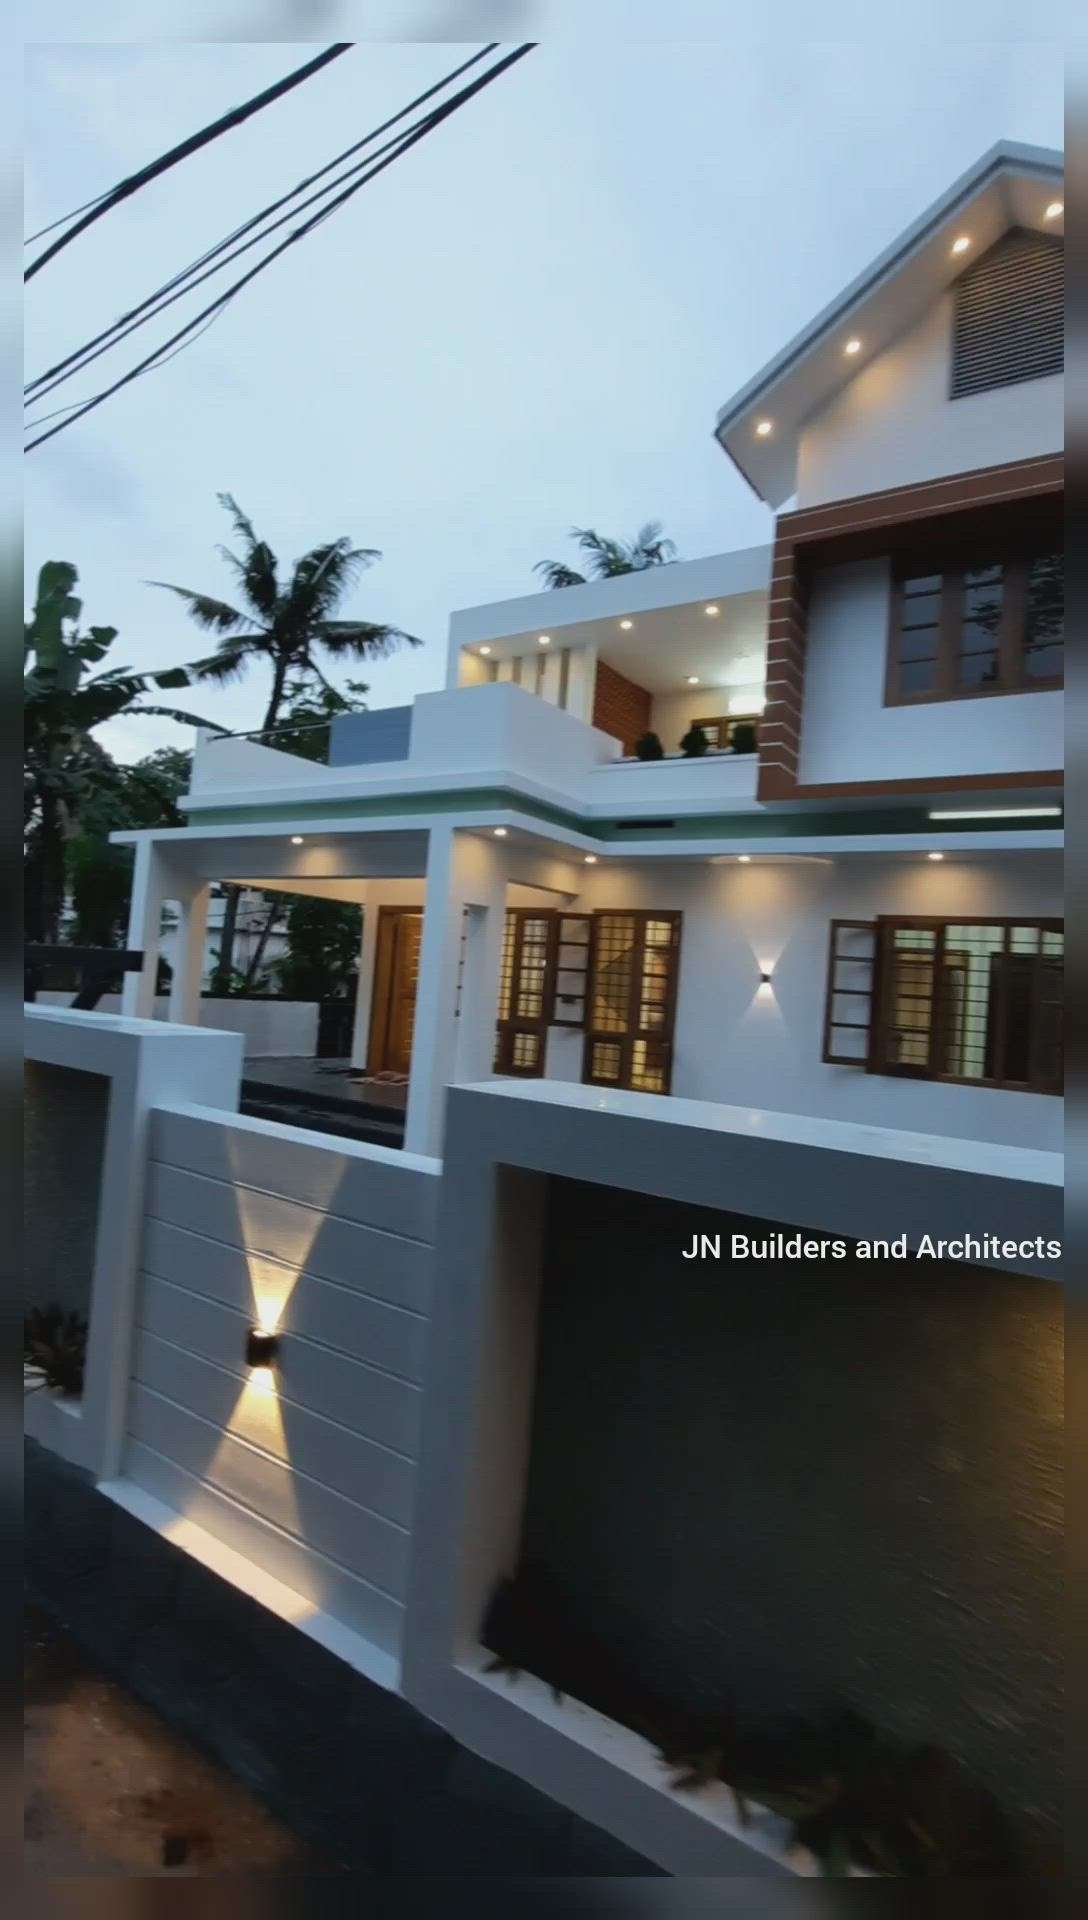 2056 sqft home
client: Shanavas S.S, mariyappally, Kottayam
for more details:9495956859
Jnbuildersandarchitects@gmail.com 
 #exteriordesigns #ContemporaryHouse